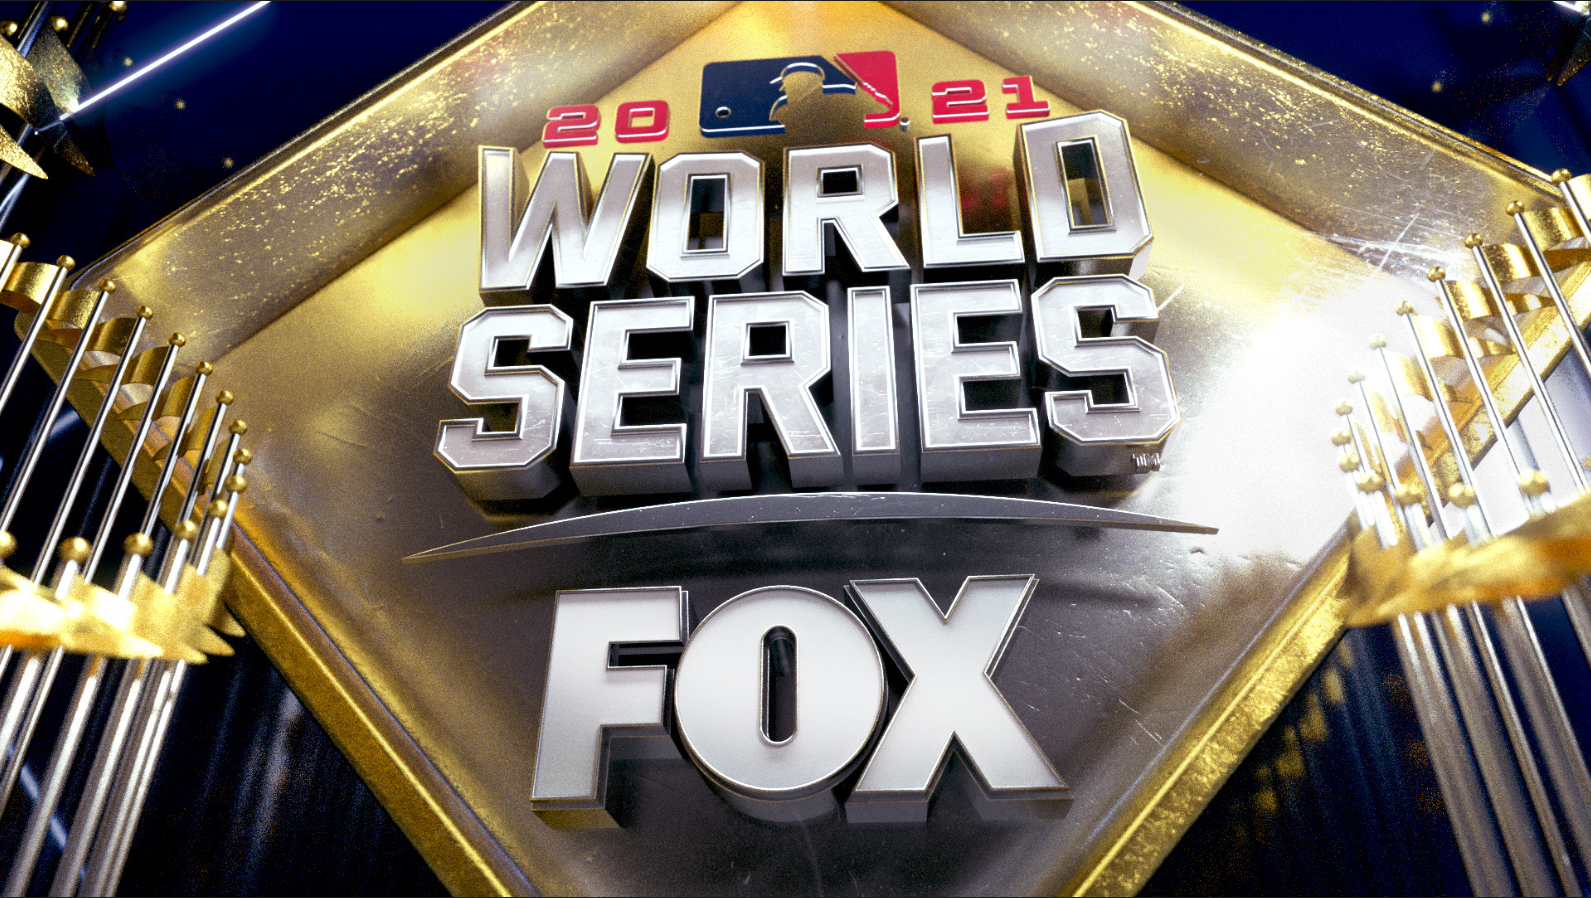 MLB Postseason 2021 Foxs New Graphics Package Showcases Gamification, Natural Elements of Baseball